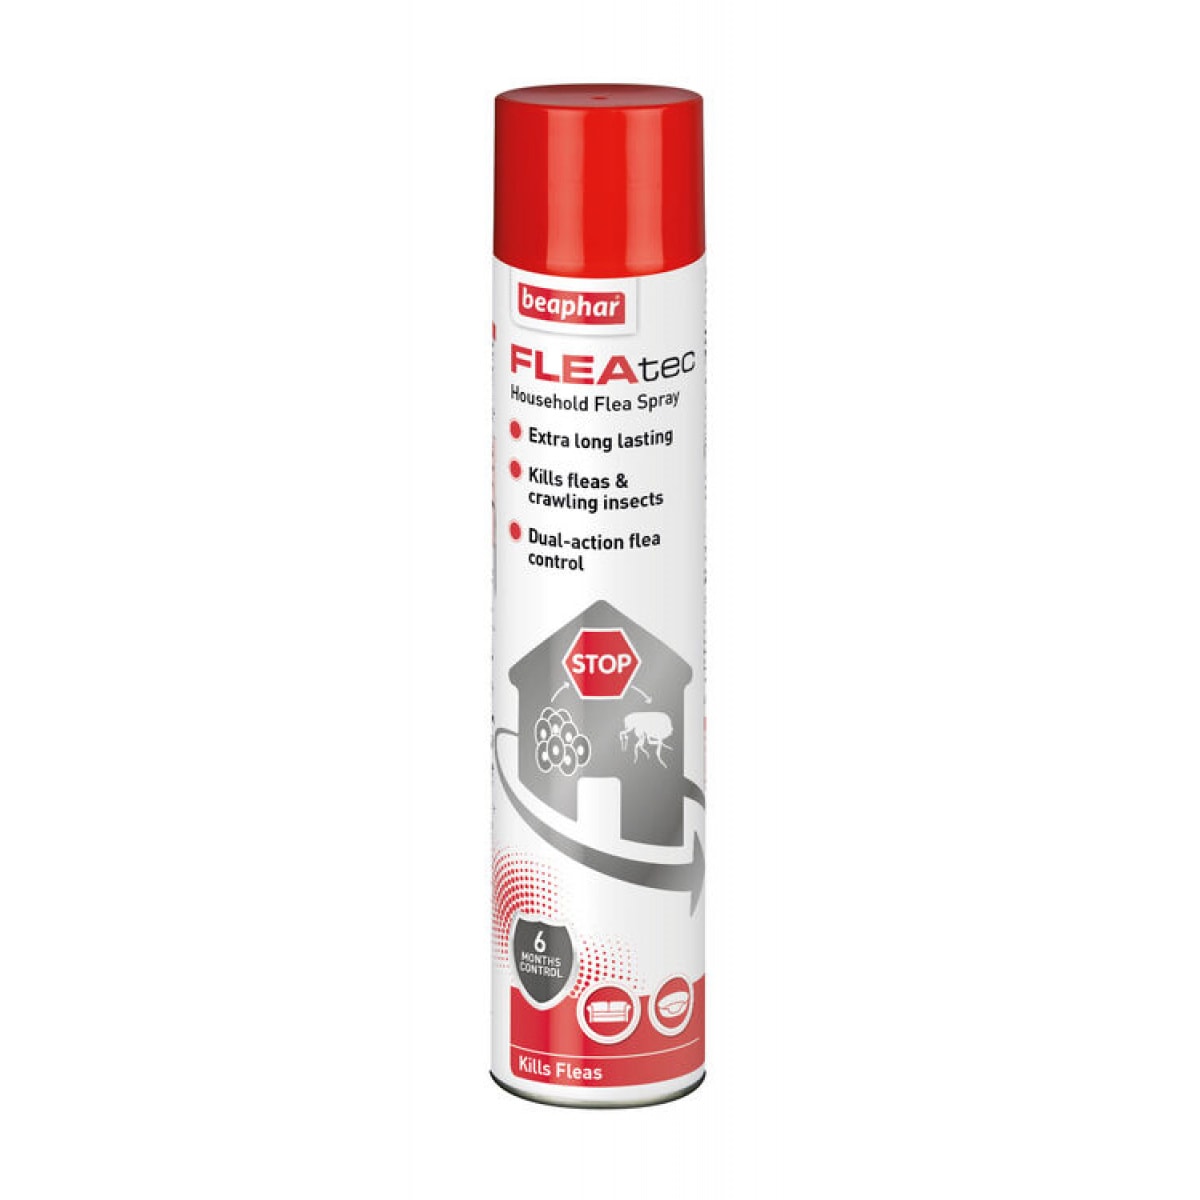 Beaphar - FLEAtec Household Flea Spray - 600ml Main Image